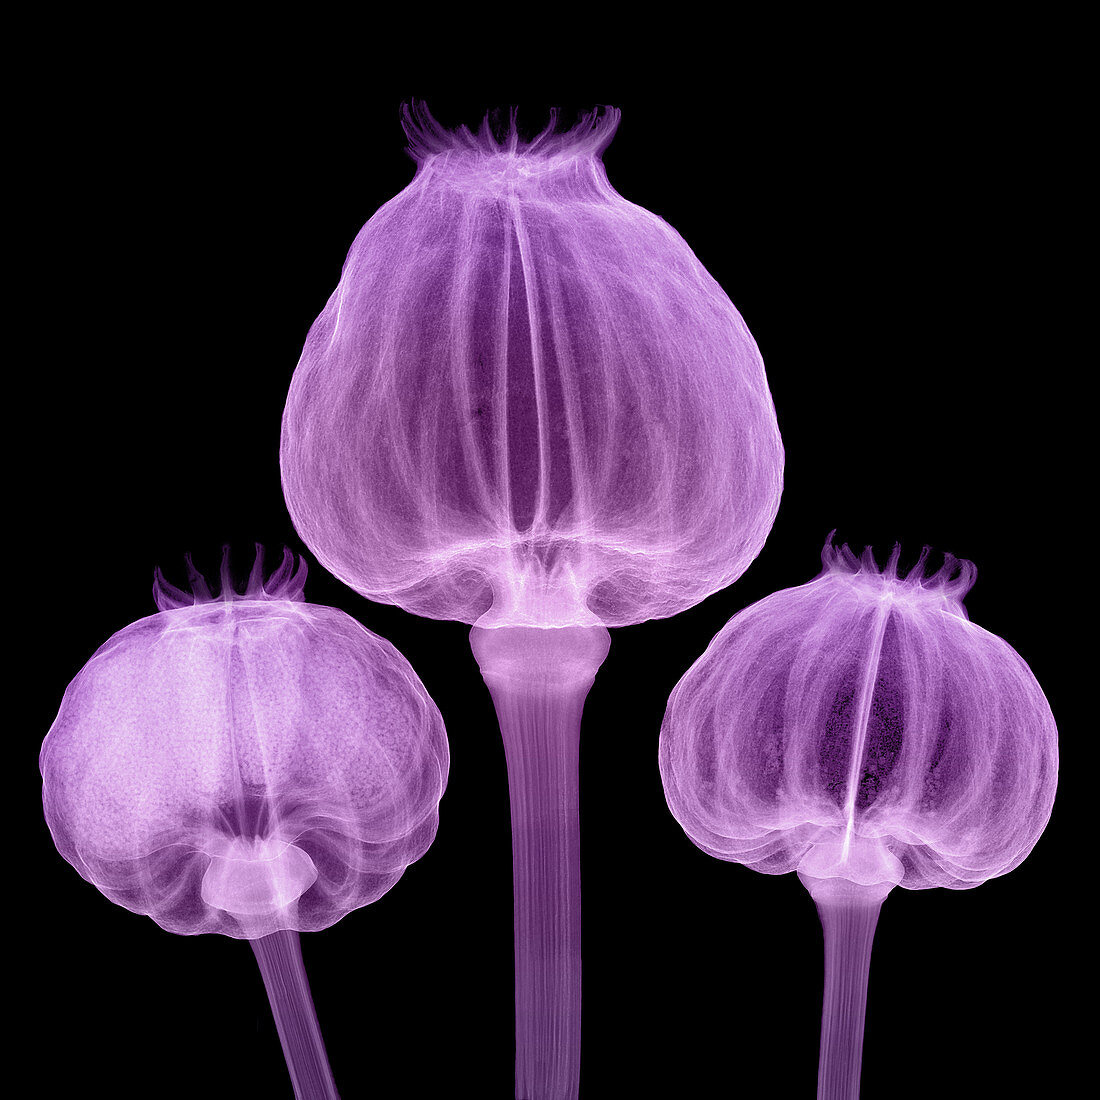 Opium Poppy Pods, X-ray